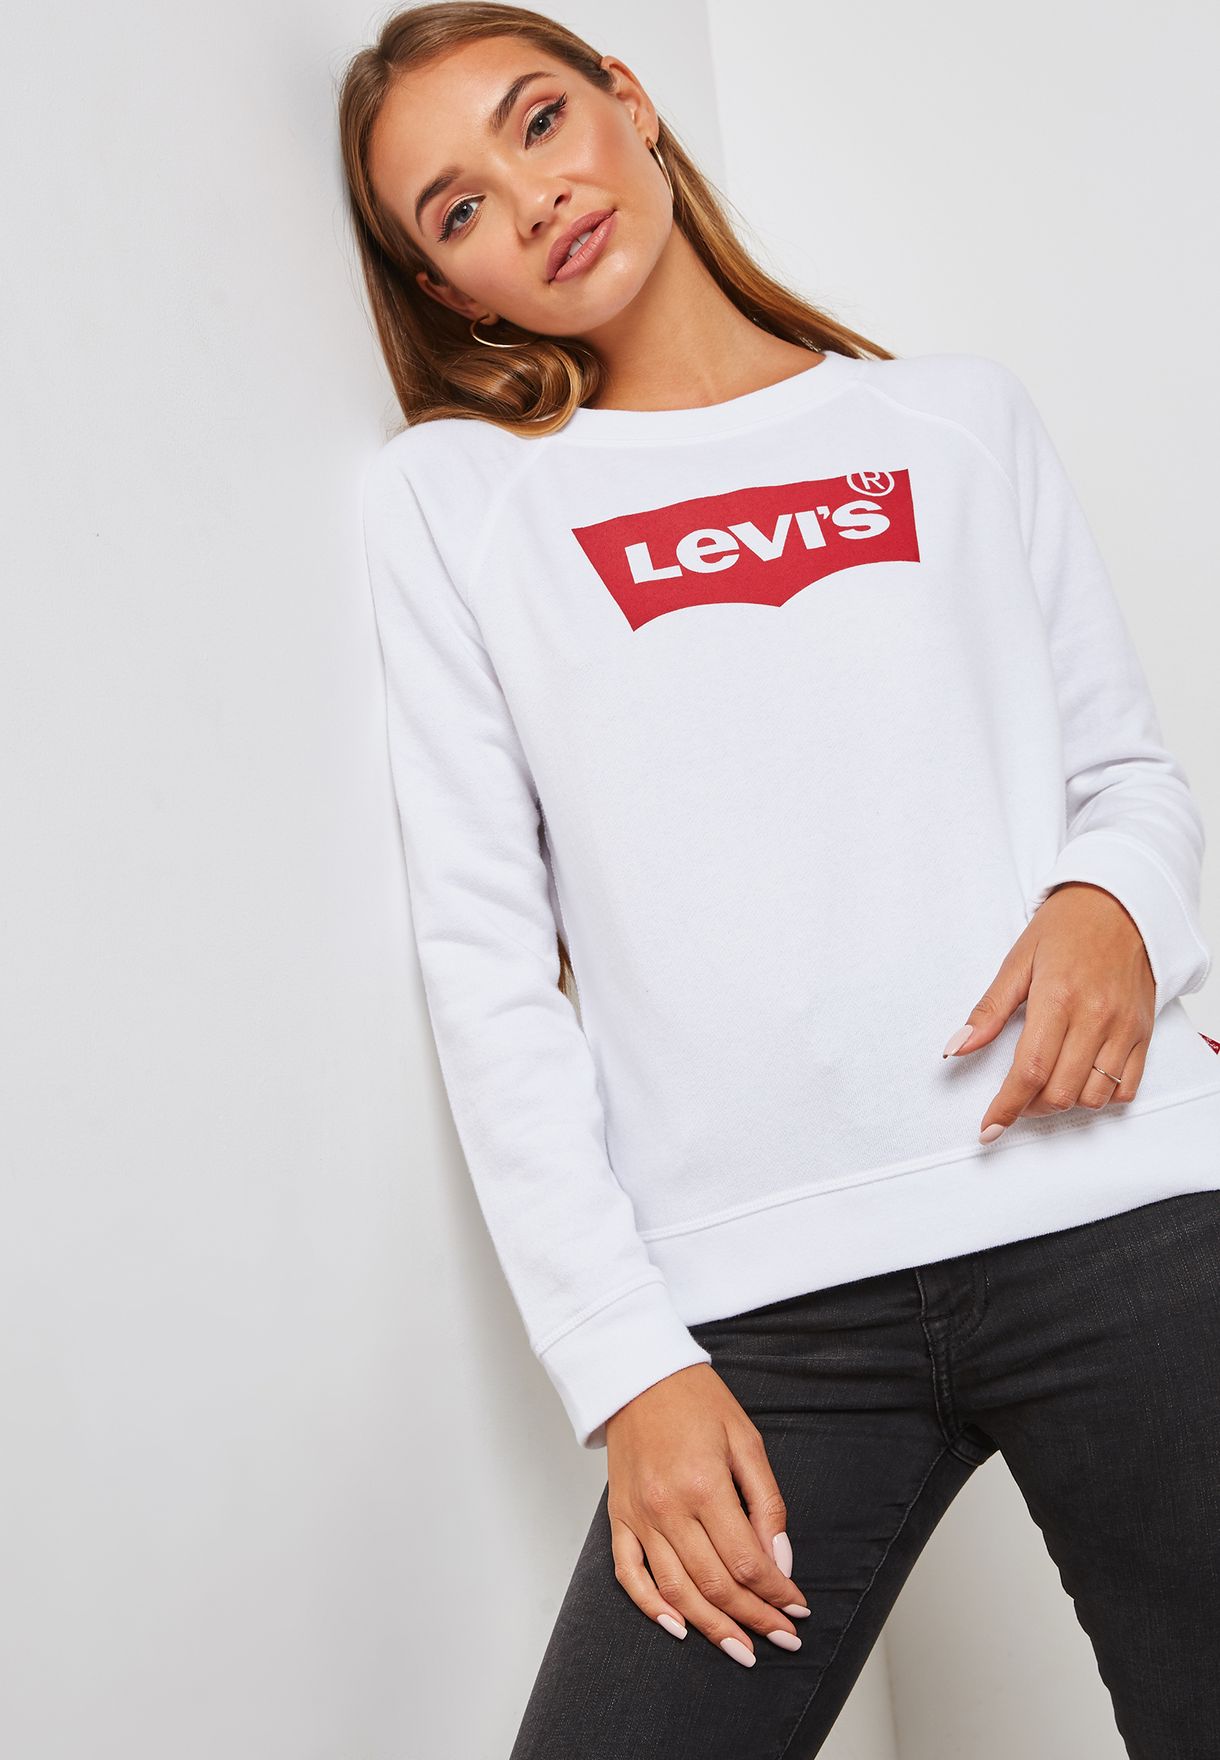 white levis sweatshirt